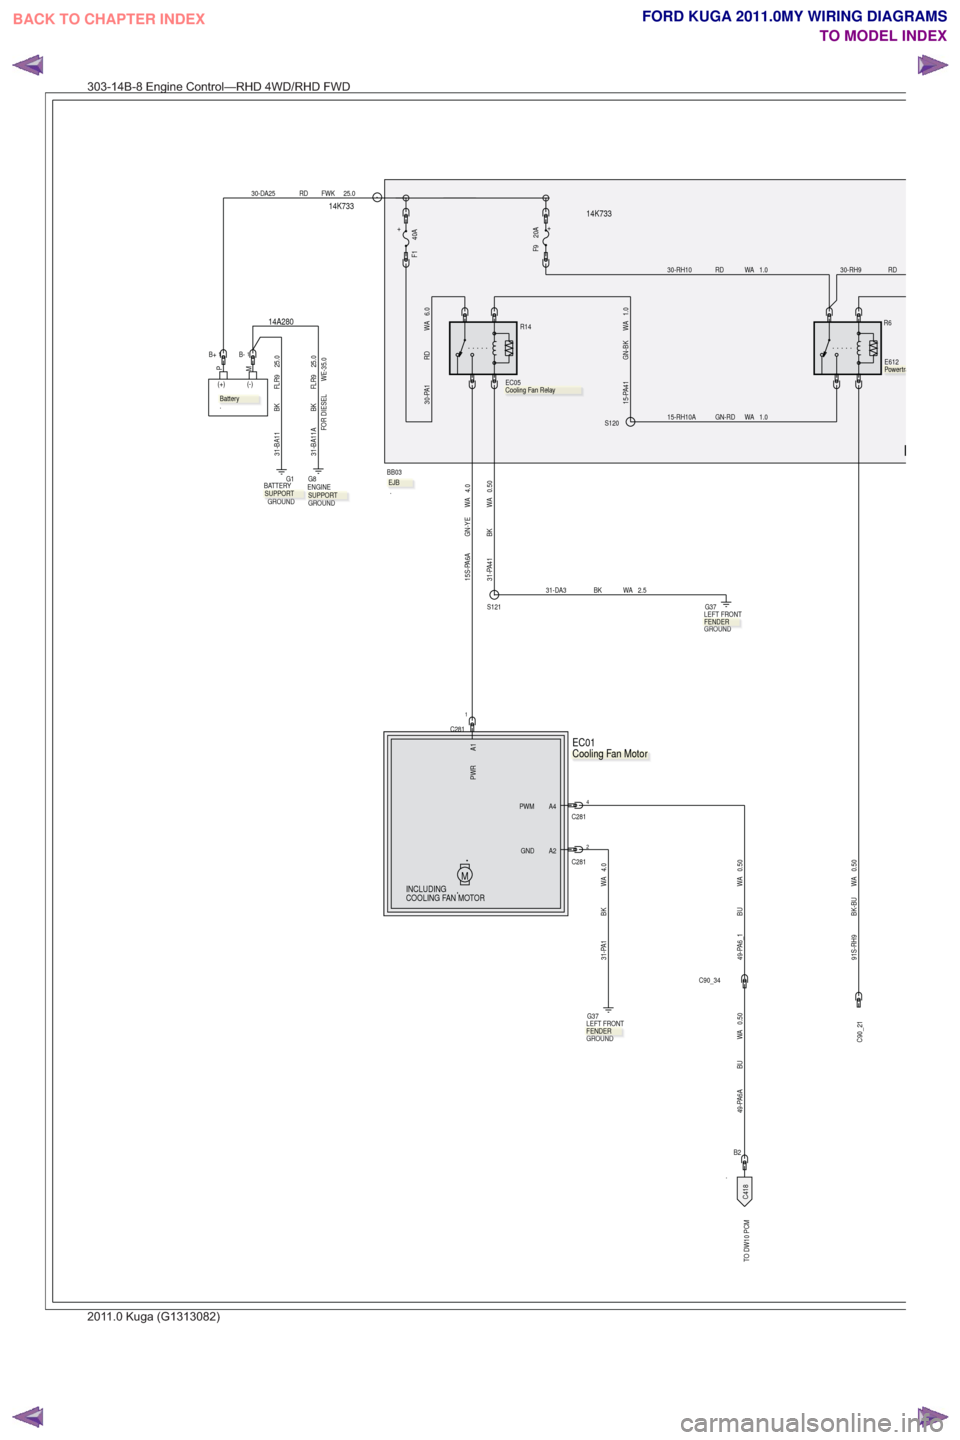 FORD KUGA 2011 1.G Wiring Diagram Repair Manual .
TO DW10 PCM
14K73314K733
14A280
WE-35.0
FOR DIESEL
F
4.0
WA
BK
31-PA1
C281
4
0.50
WA
BU
49-PA6_1
A4
PWM
A2
GND
PWR A1
INCLUDING
COOLING FAN MOTORM
EC01.
25.0
FWK
RD
30-DA25
PM
(+) (-)
.
B+11B-
GROUN